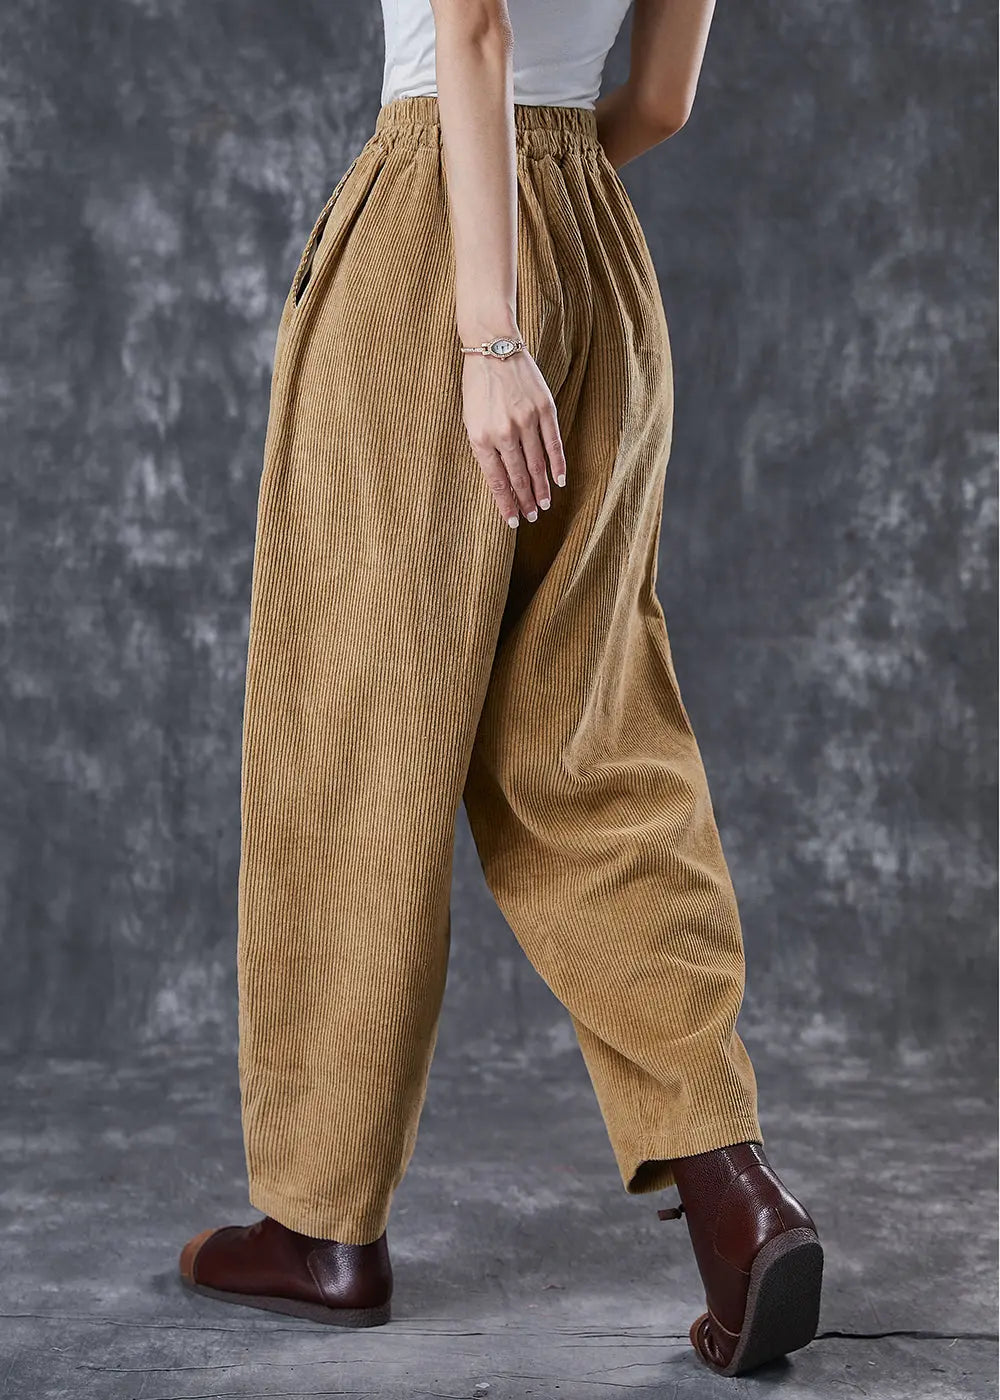 Italian Khaki Oversized Patchwork Applique Corduroy Pants Trousers Spring Ada Fashion